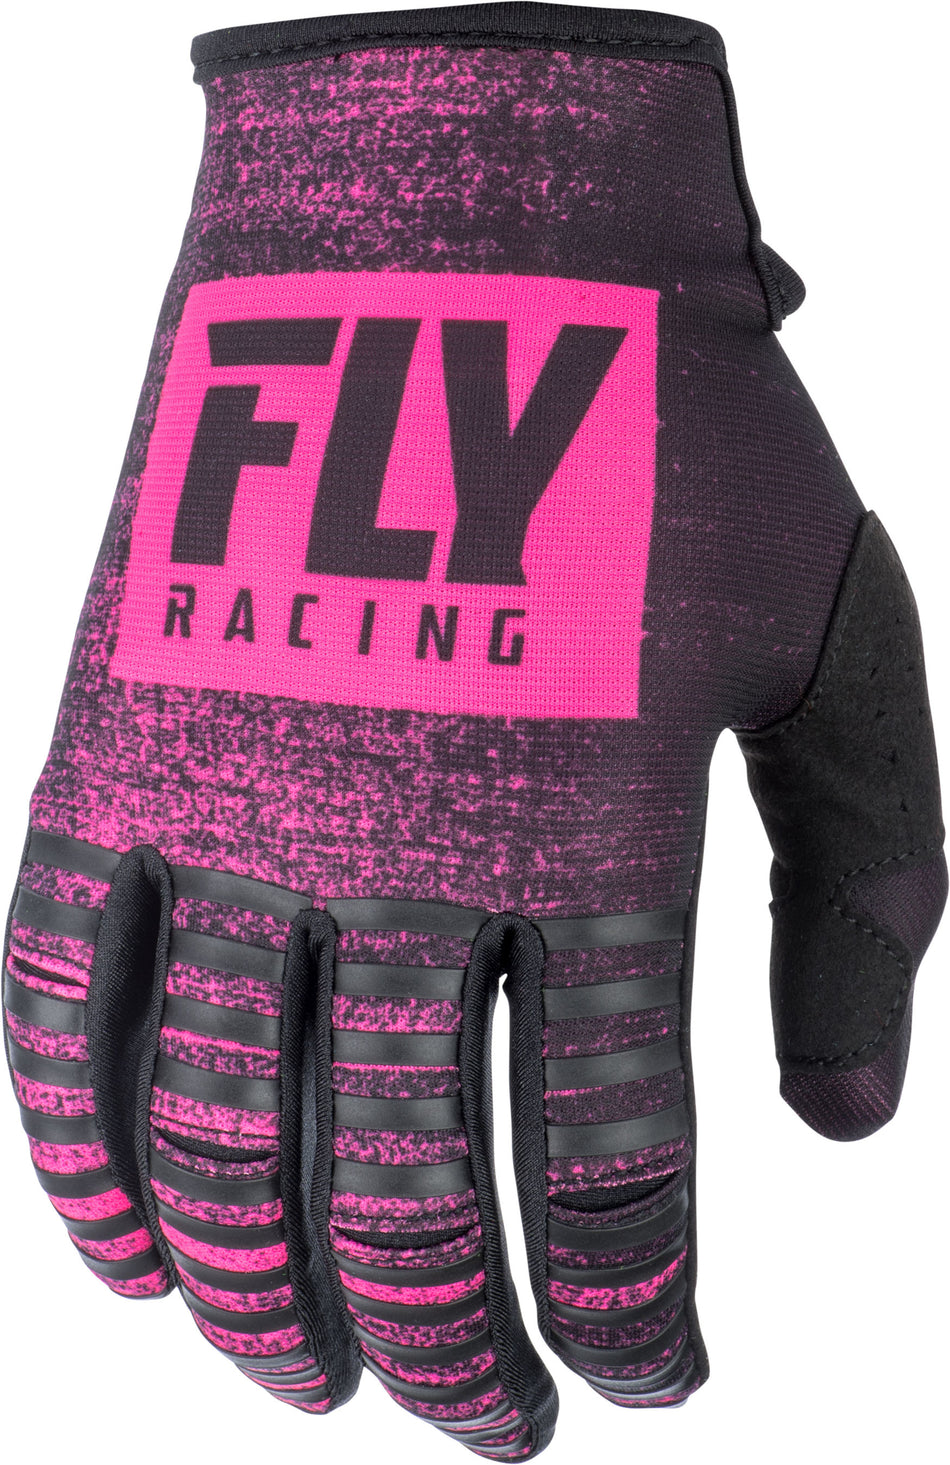 FLY RACING Kinetic Noiz Gloves Neon Pink/Black Sz 11 372-51811